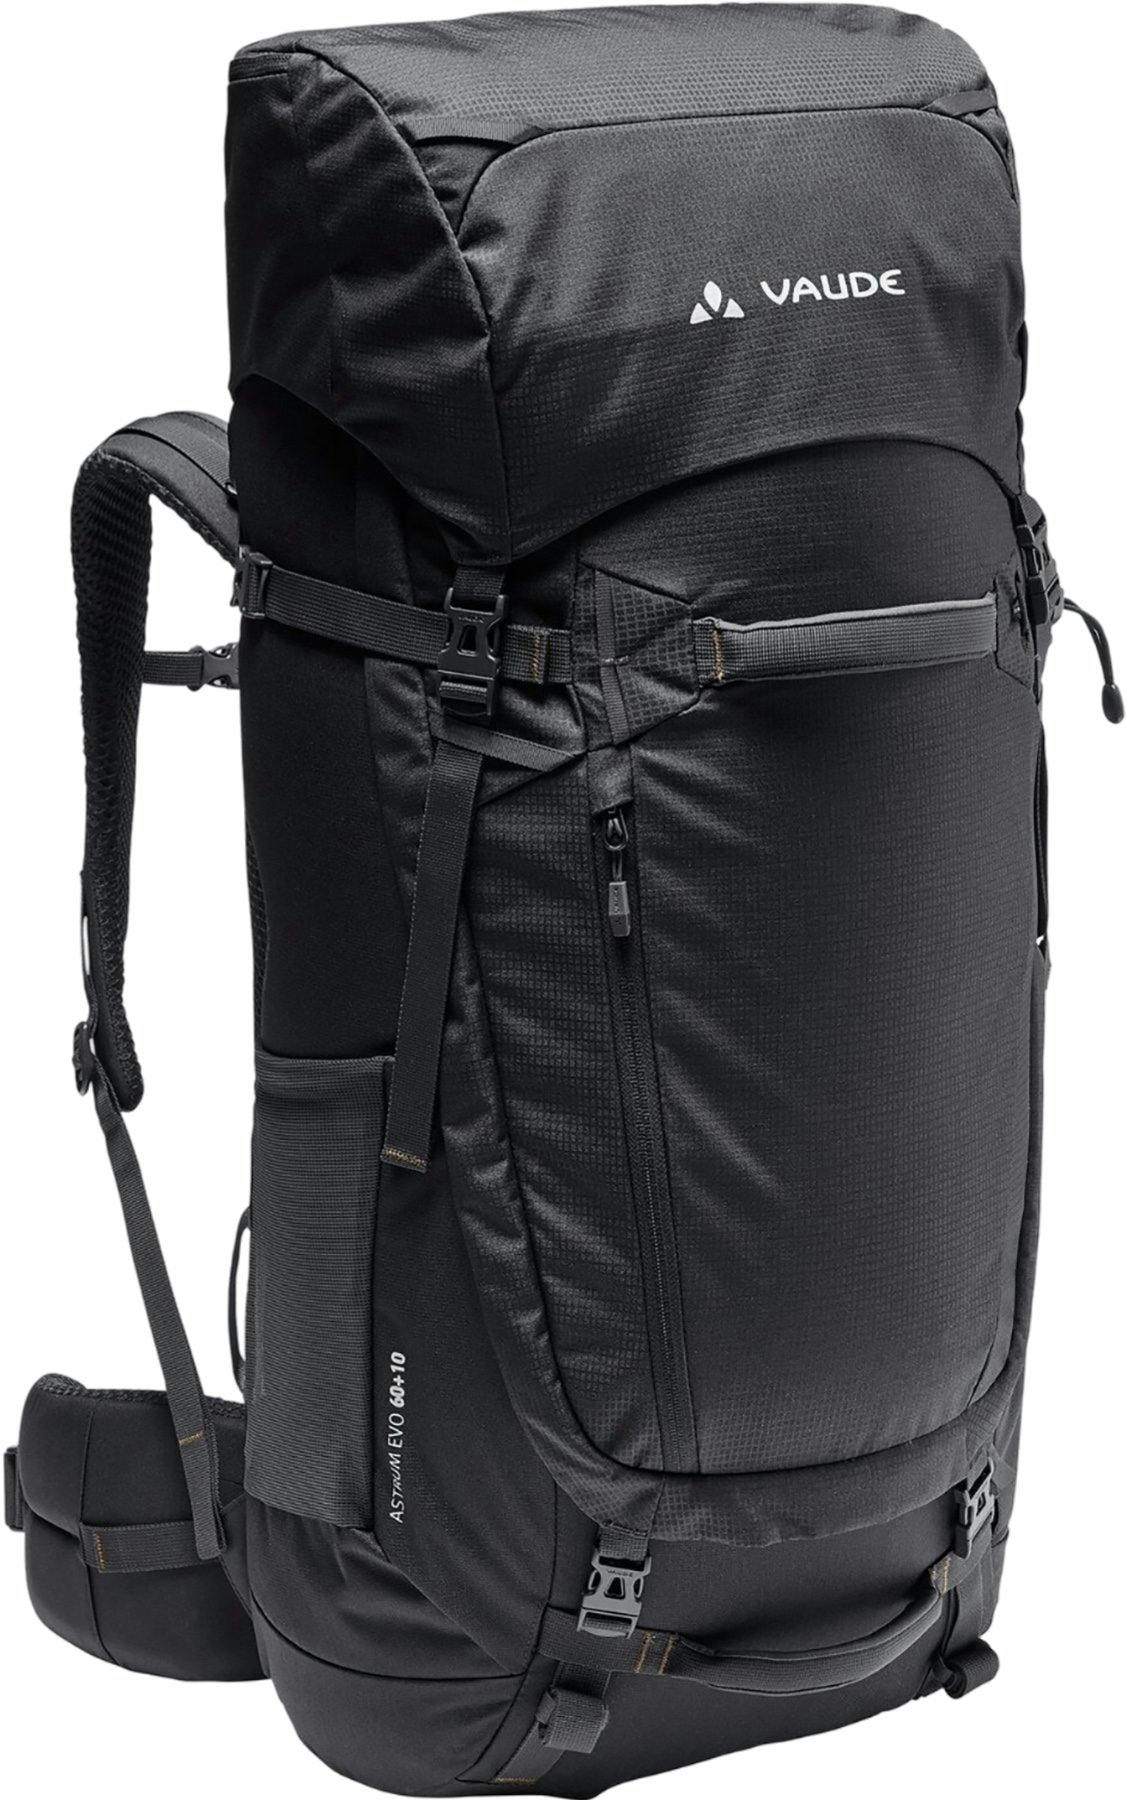 Product image for Astrum EVO Trekking Backpack 60+10L - Unisex